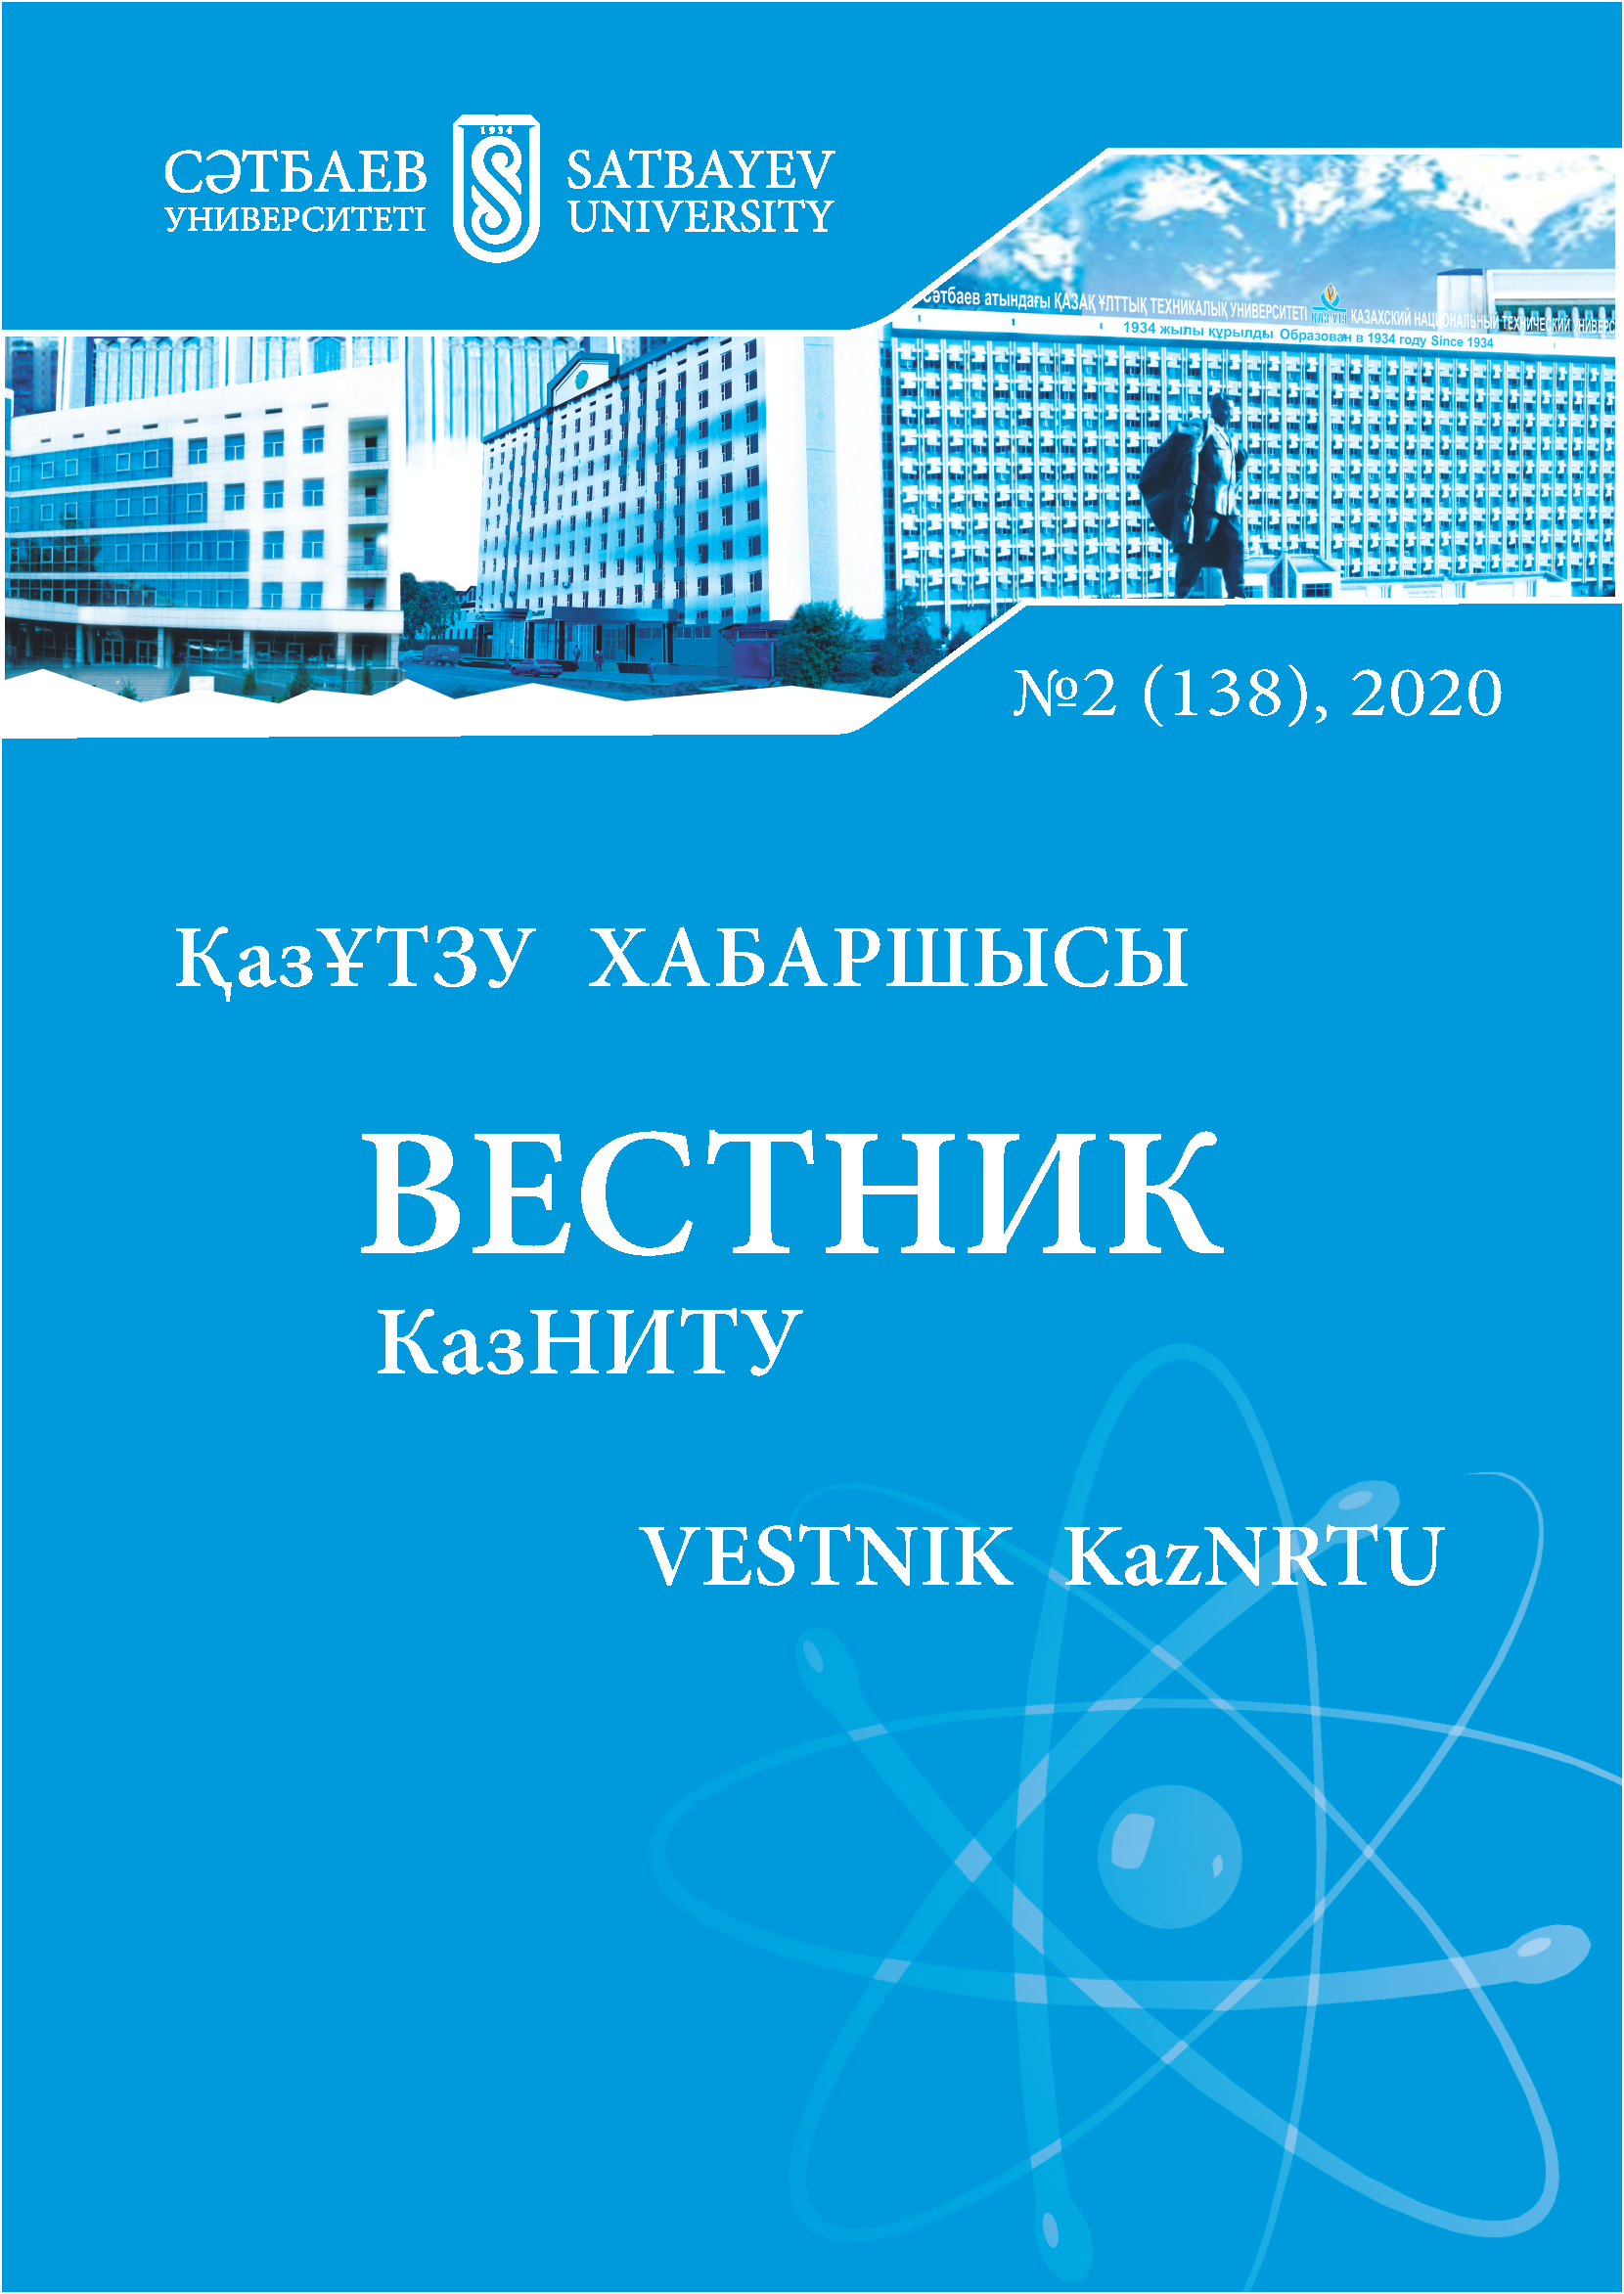 					View Vol. 138 No. 2 (2020): Vestnik KazNRTU
				